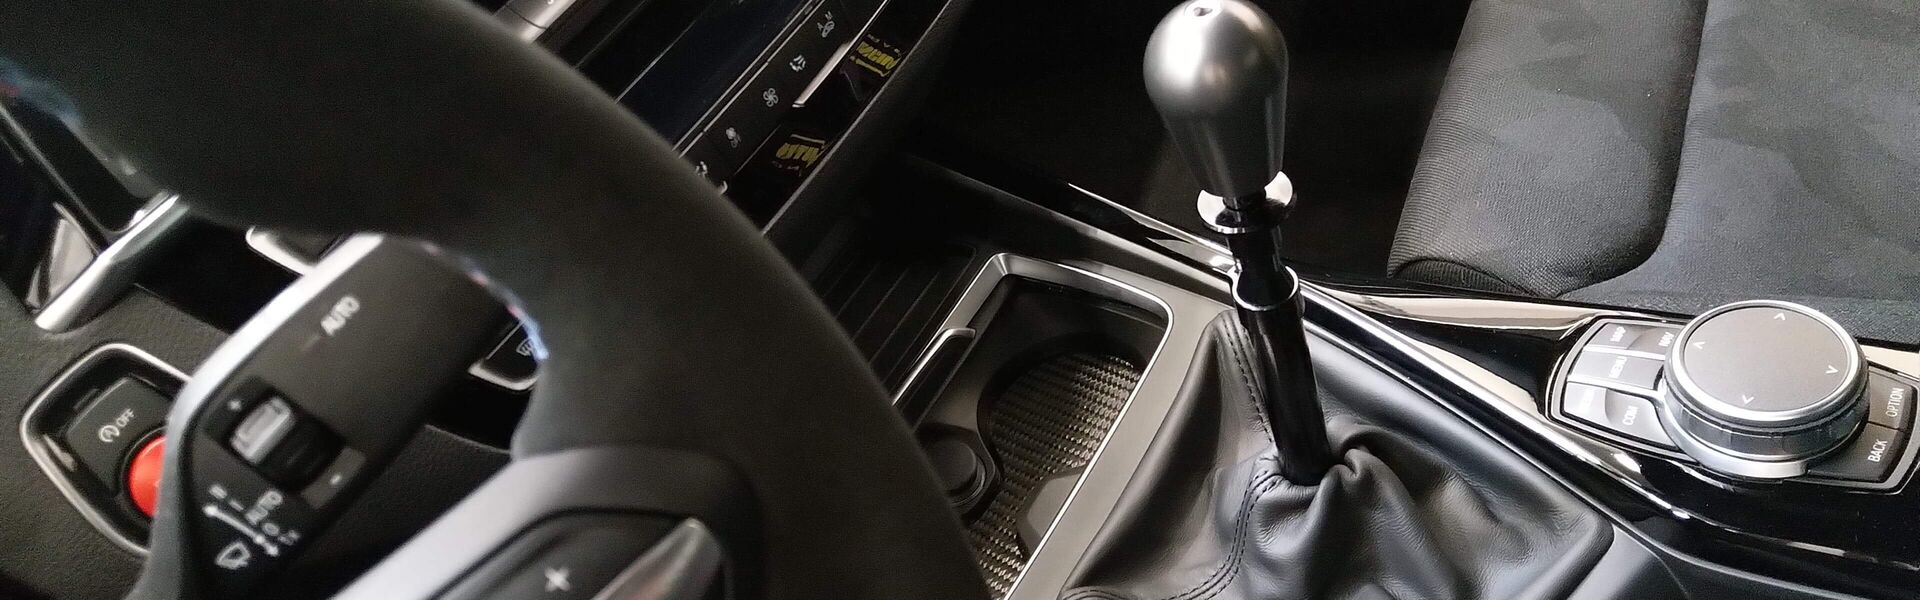 Gearbox/Shift BMW M3 E36